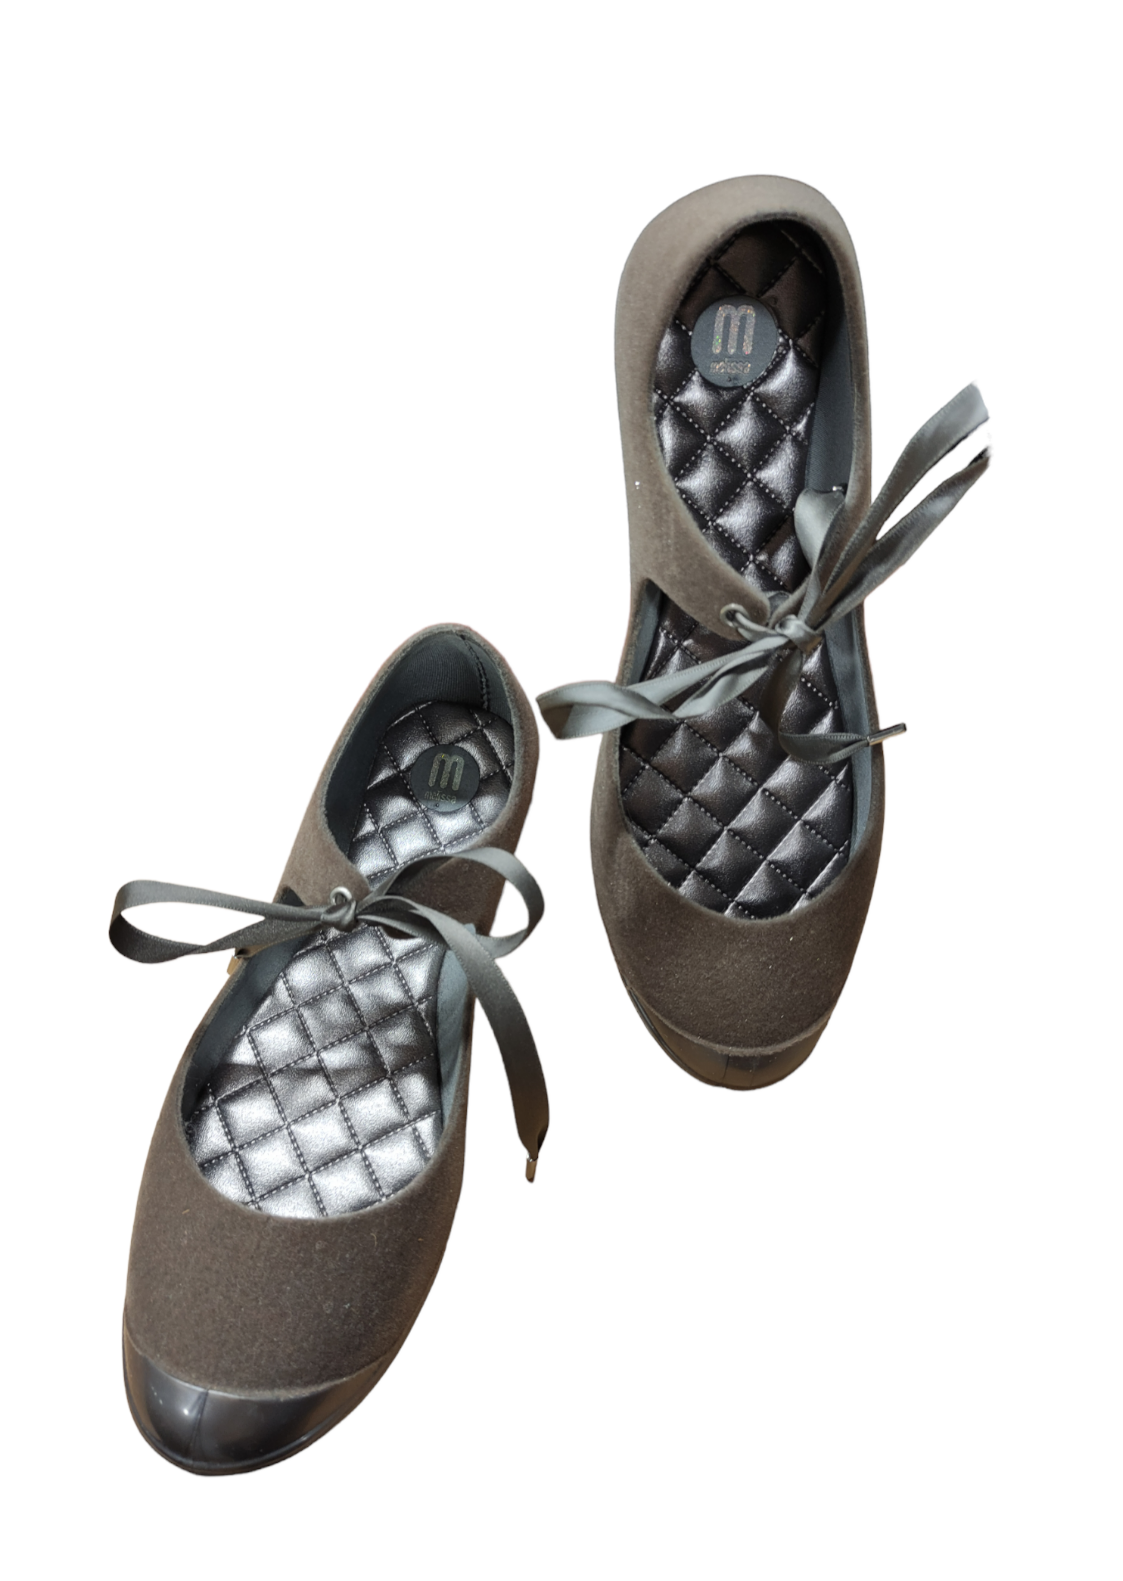 Stock Γυναικεία Παπούτσια χαμηλά MELISSA σε Χακί Χρώμα (No 39)